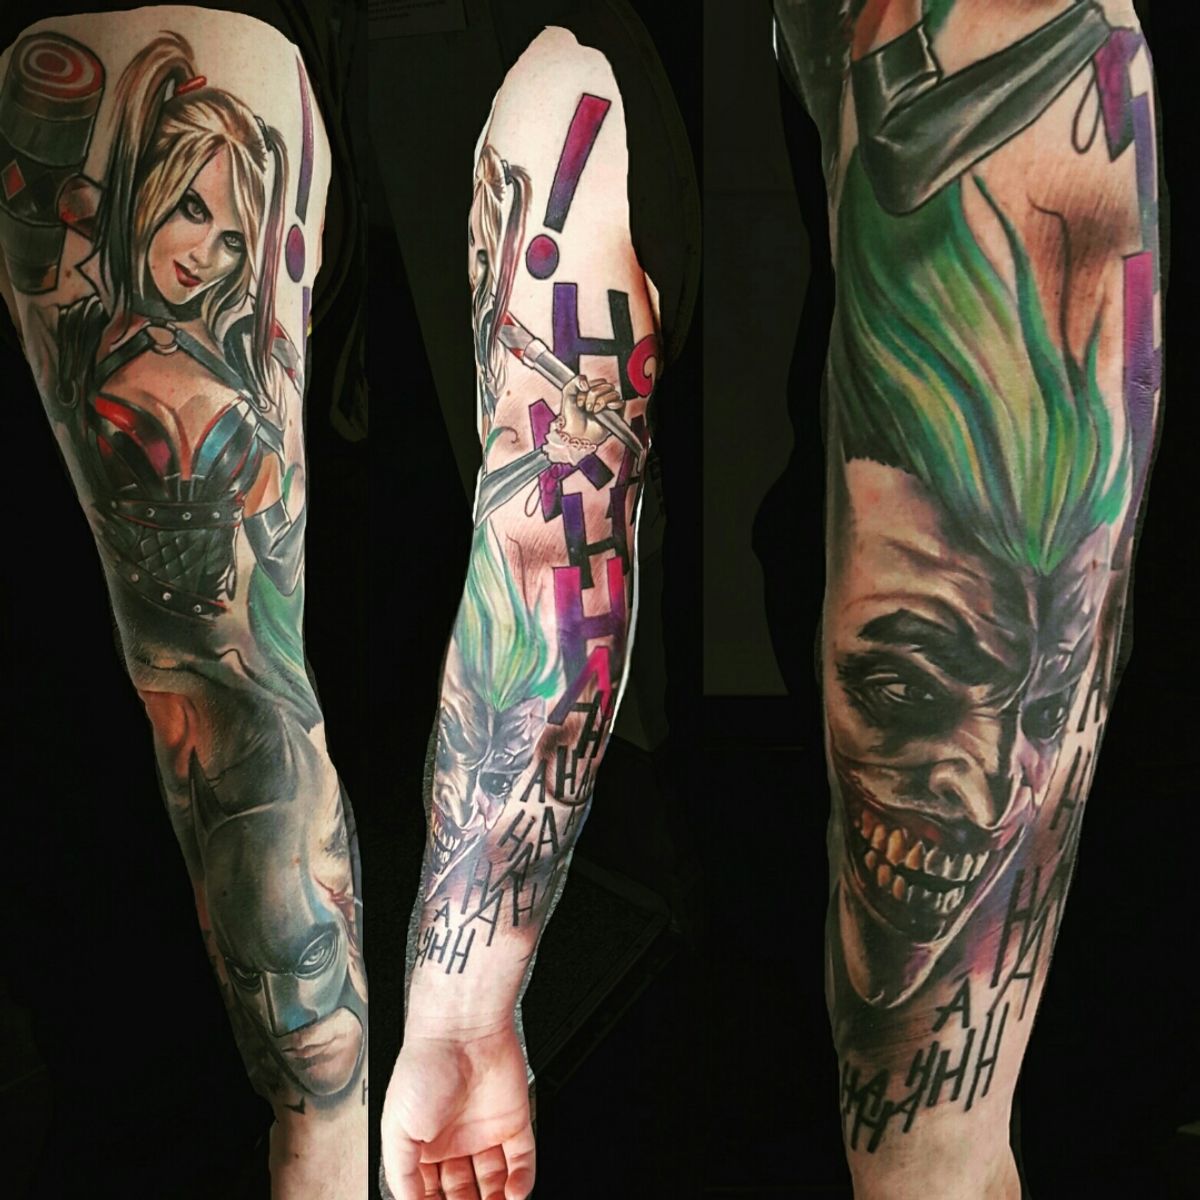 Tattoo uploaded by Tobias • Harley Quinn up top with Joker and Batman under  her. Done by Pawel Skarbowski in Oslo, Norway. 44hours of work. #harleyquinn  #thejoker #joker #batman #sleeve #dccomics • Tattoodo